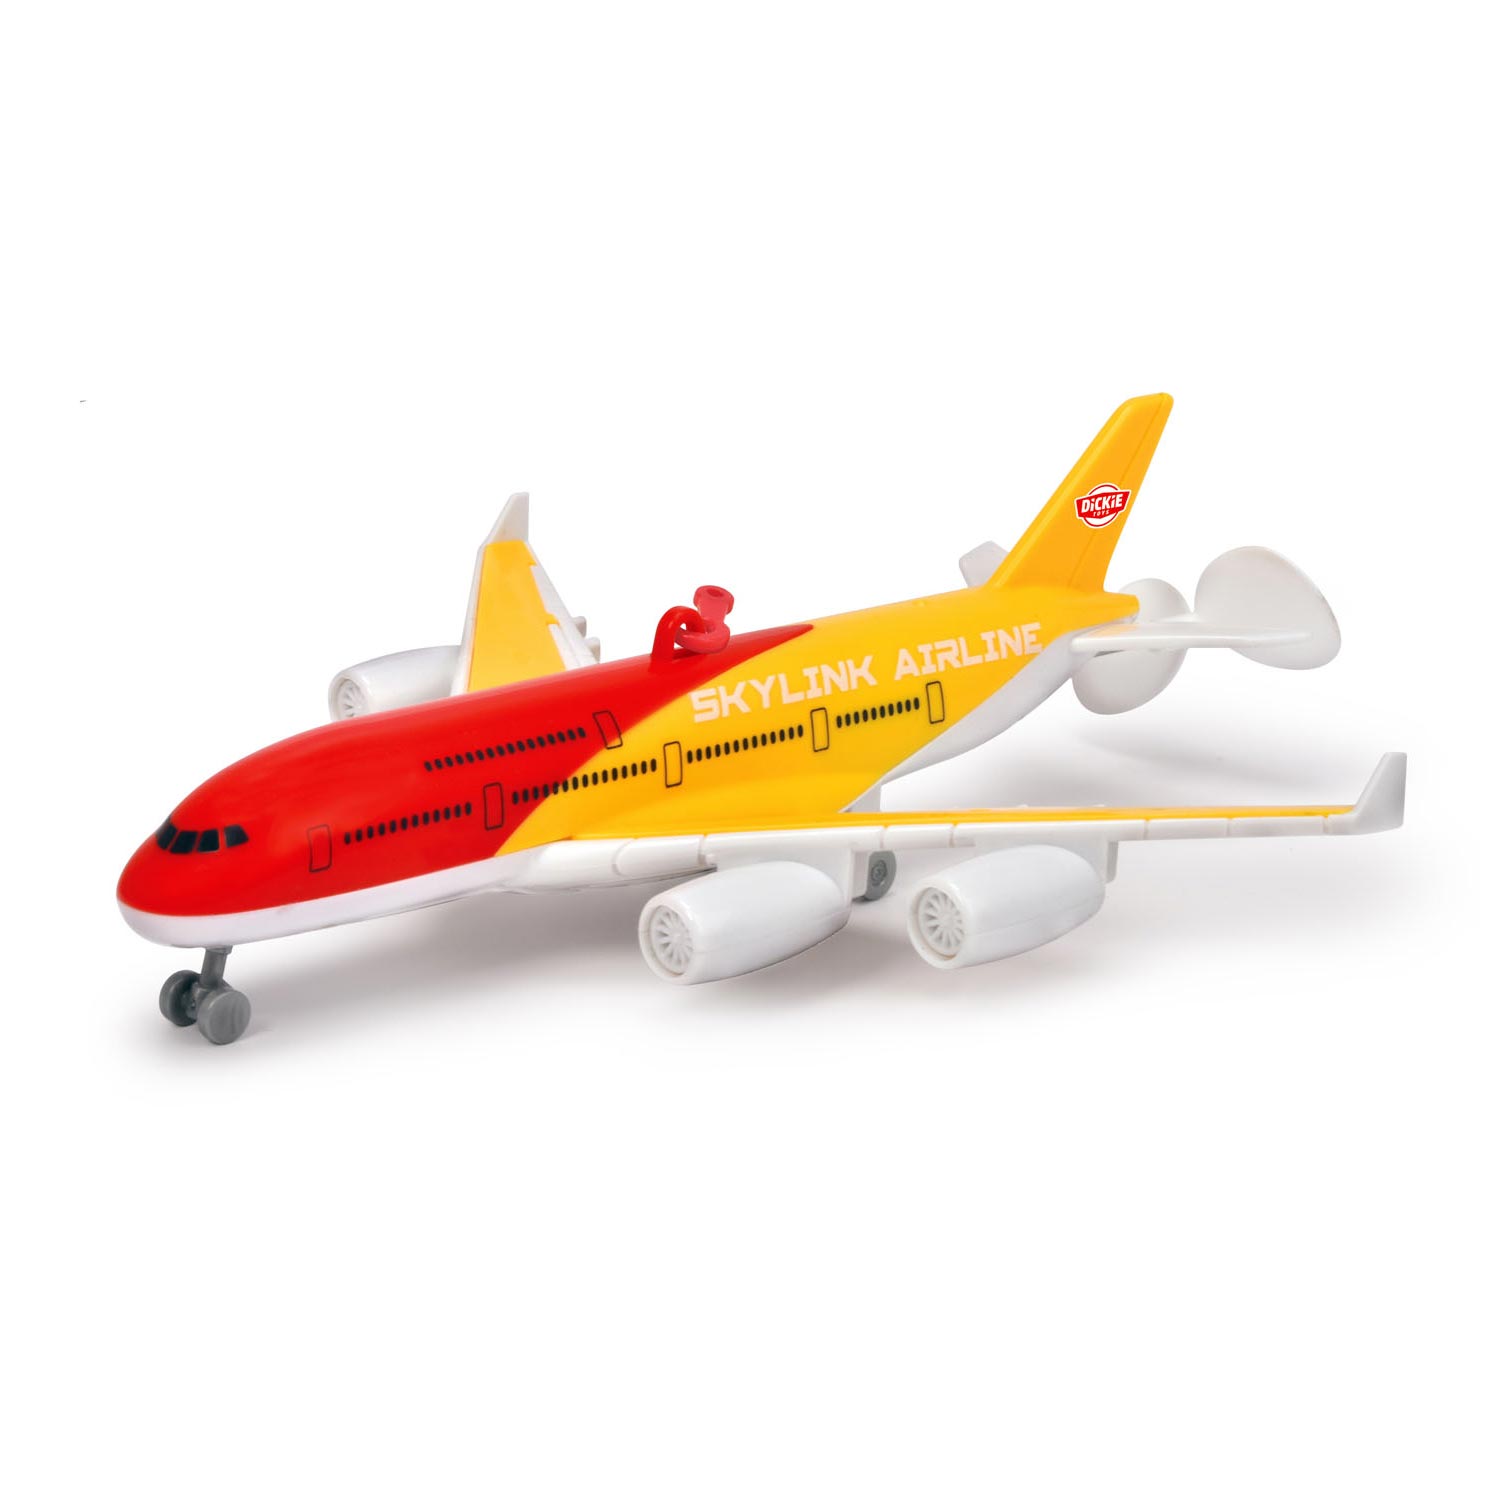 Dickie Plafond Sky Vliegtuig online | Speelgoed